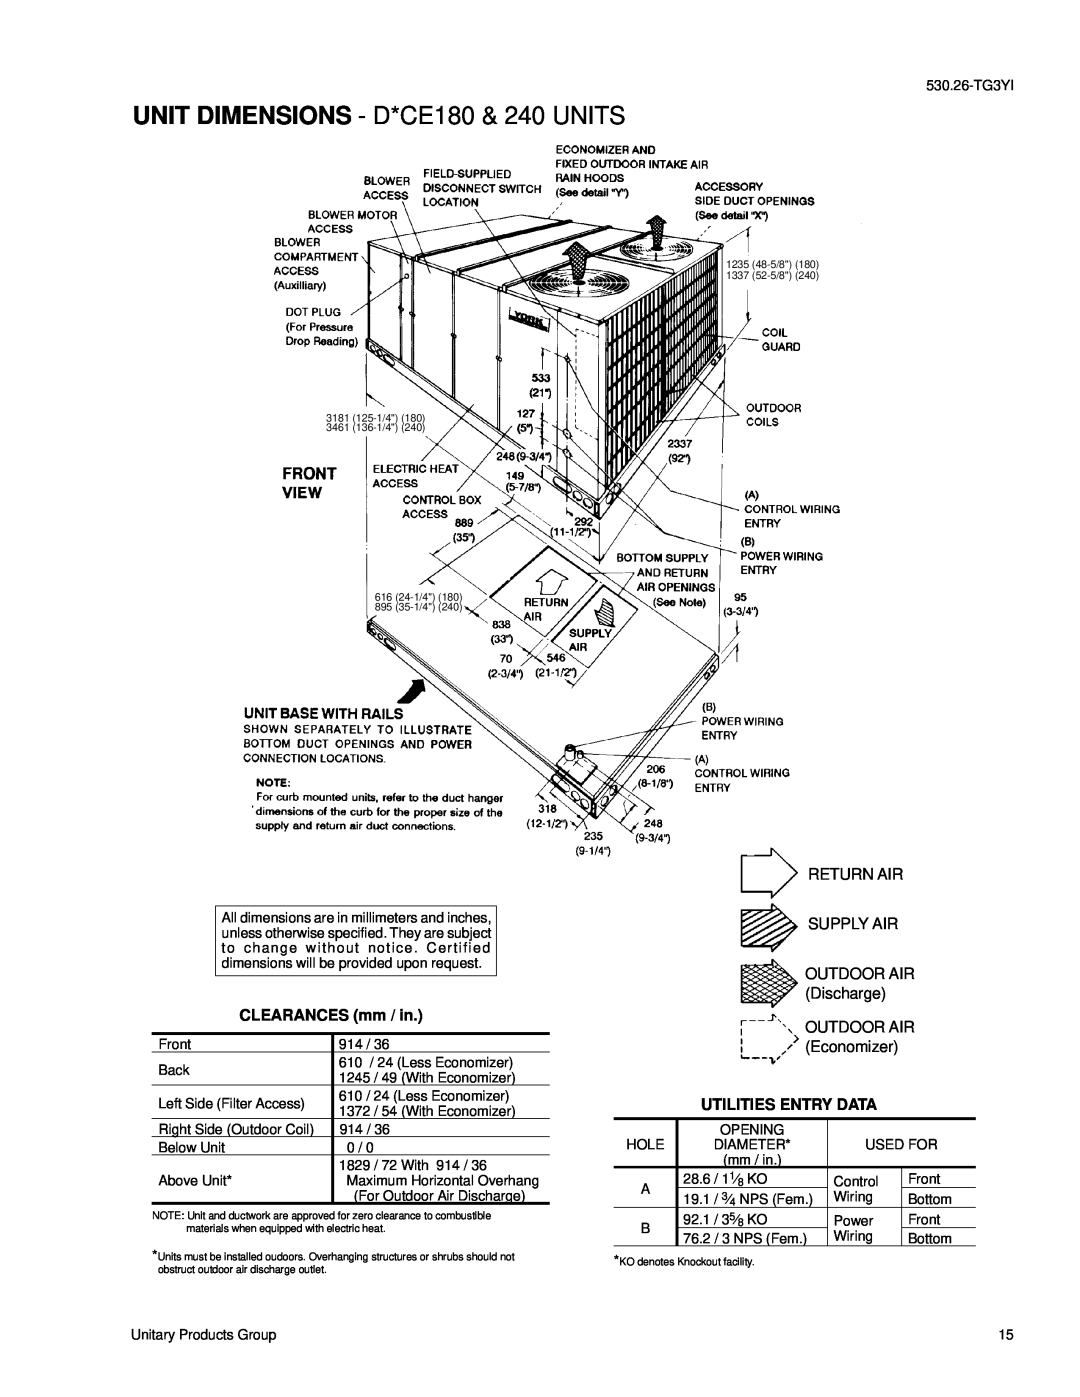 York D3CG, D3CE manual UNIT DIMENSIONS - D*CE180 & 240 UNITS, CLEARANCES mm / in, Utilities Entry Data 